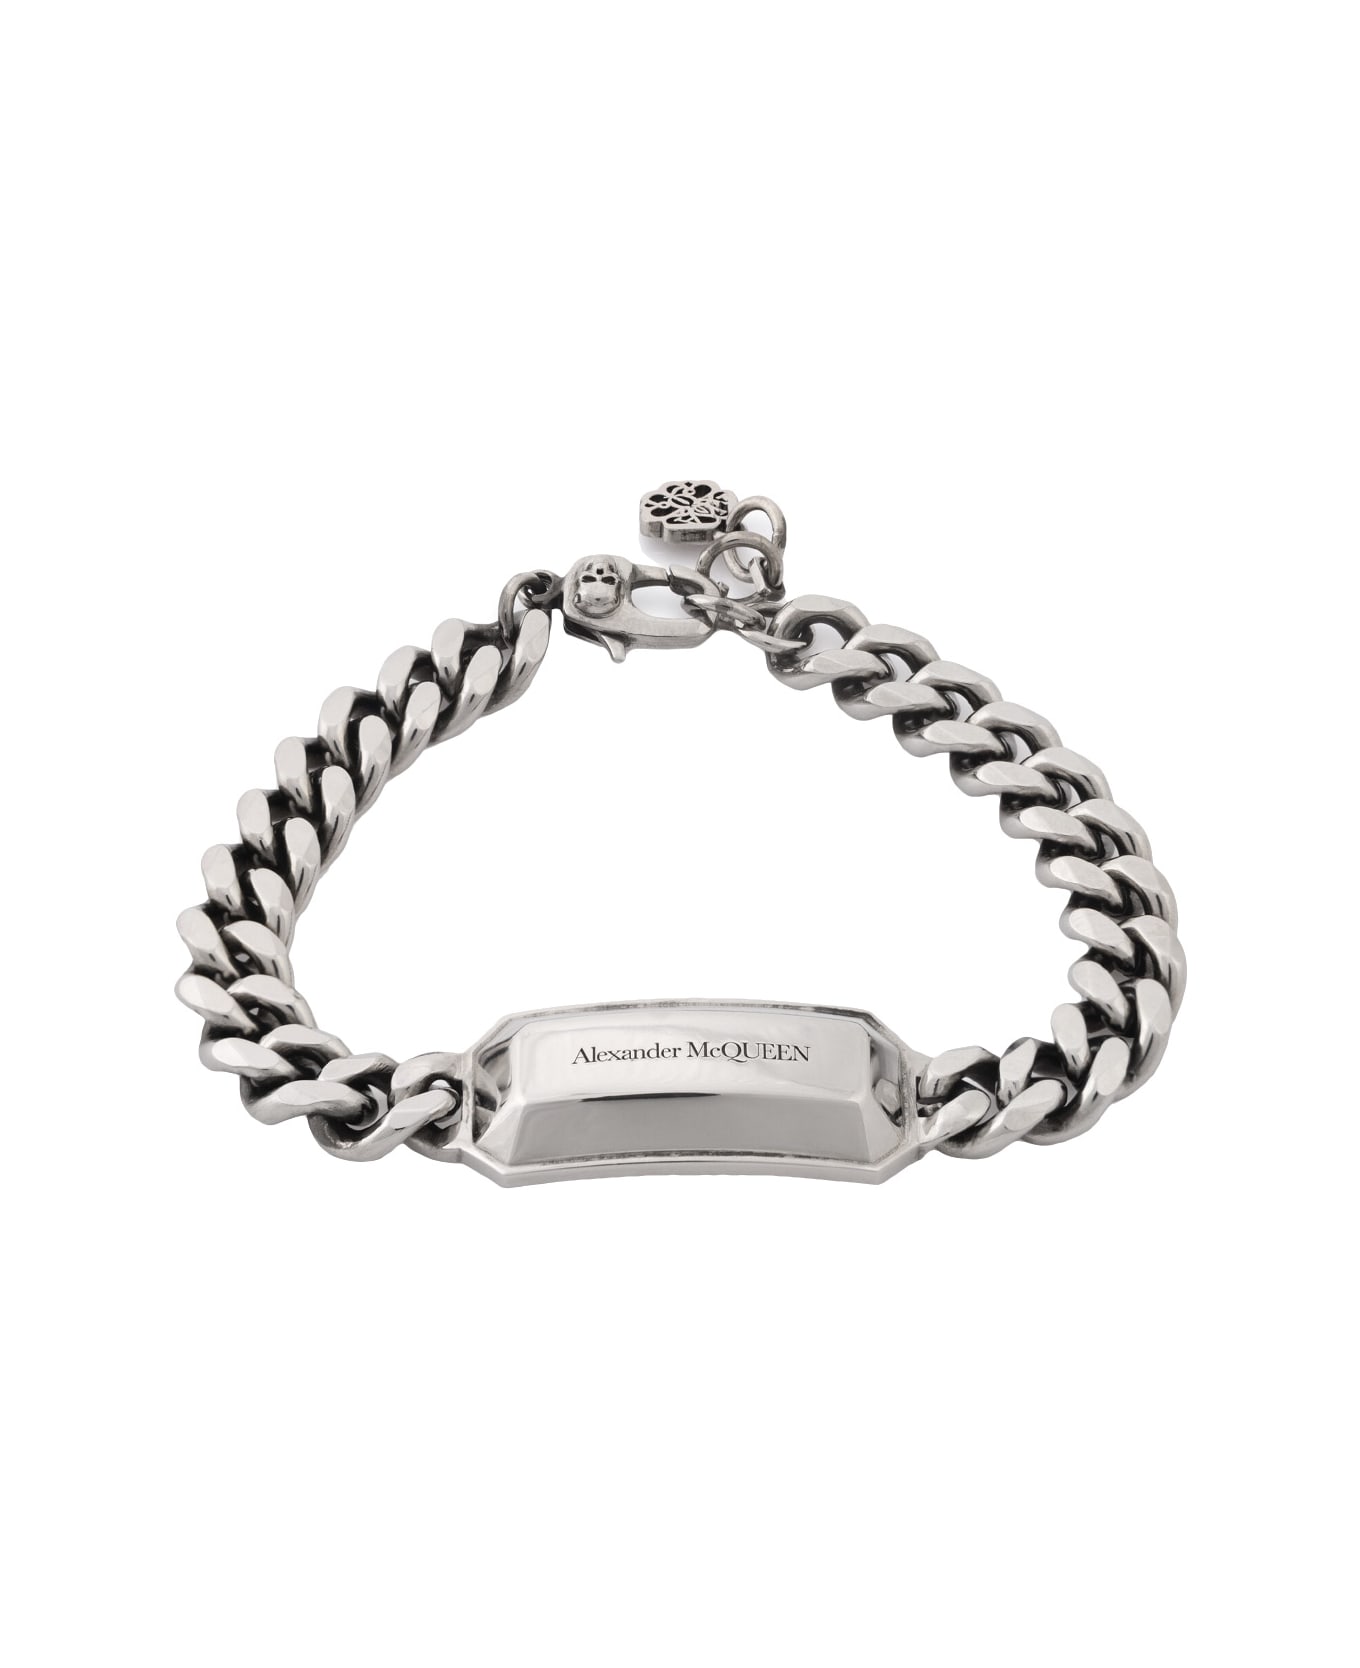 Alexander McQueen Bracelet - Silver